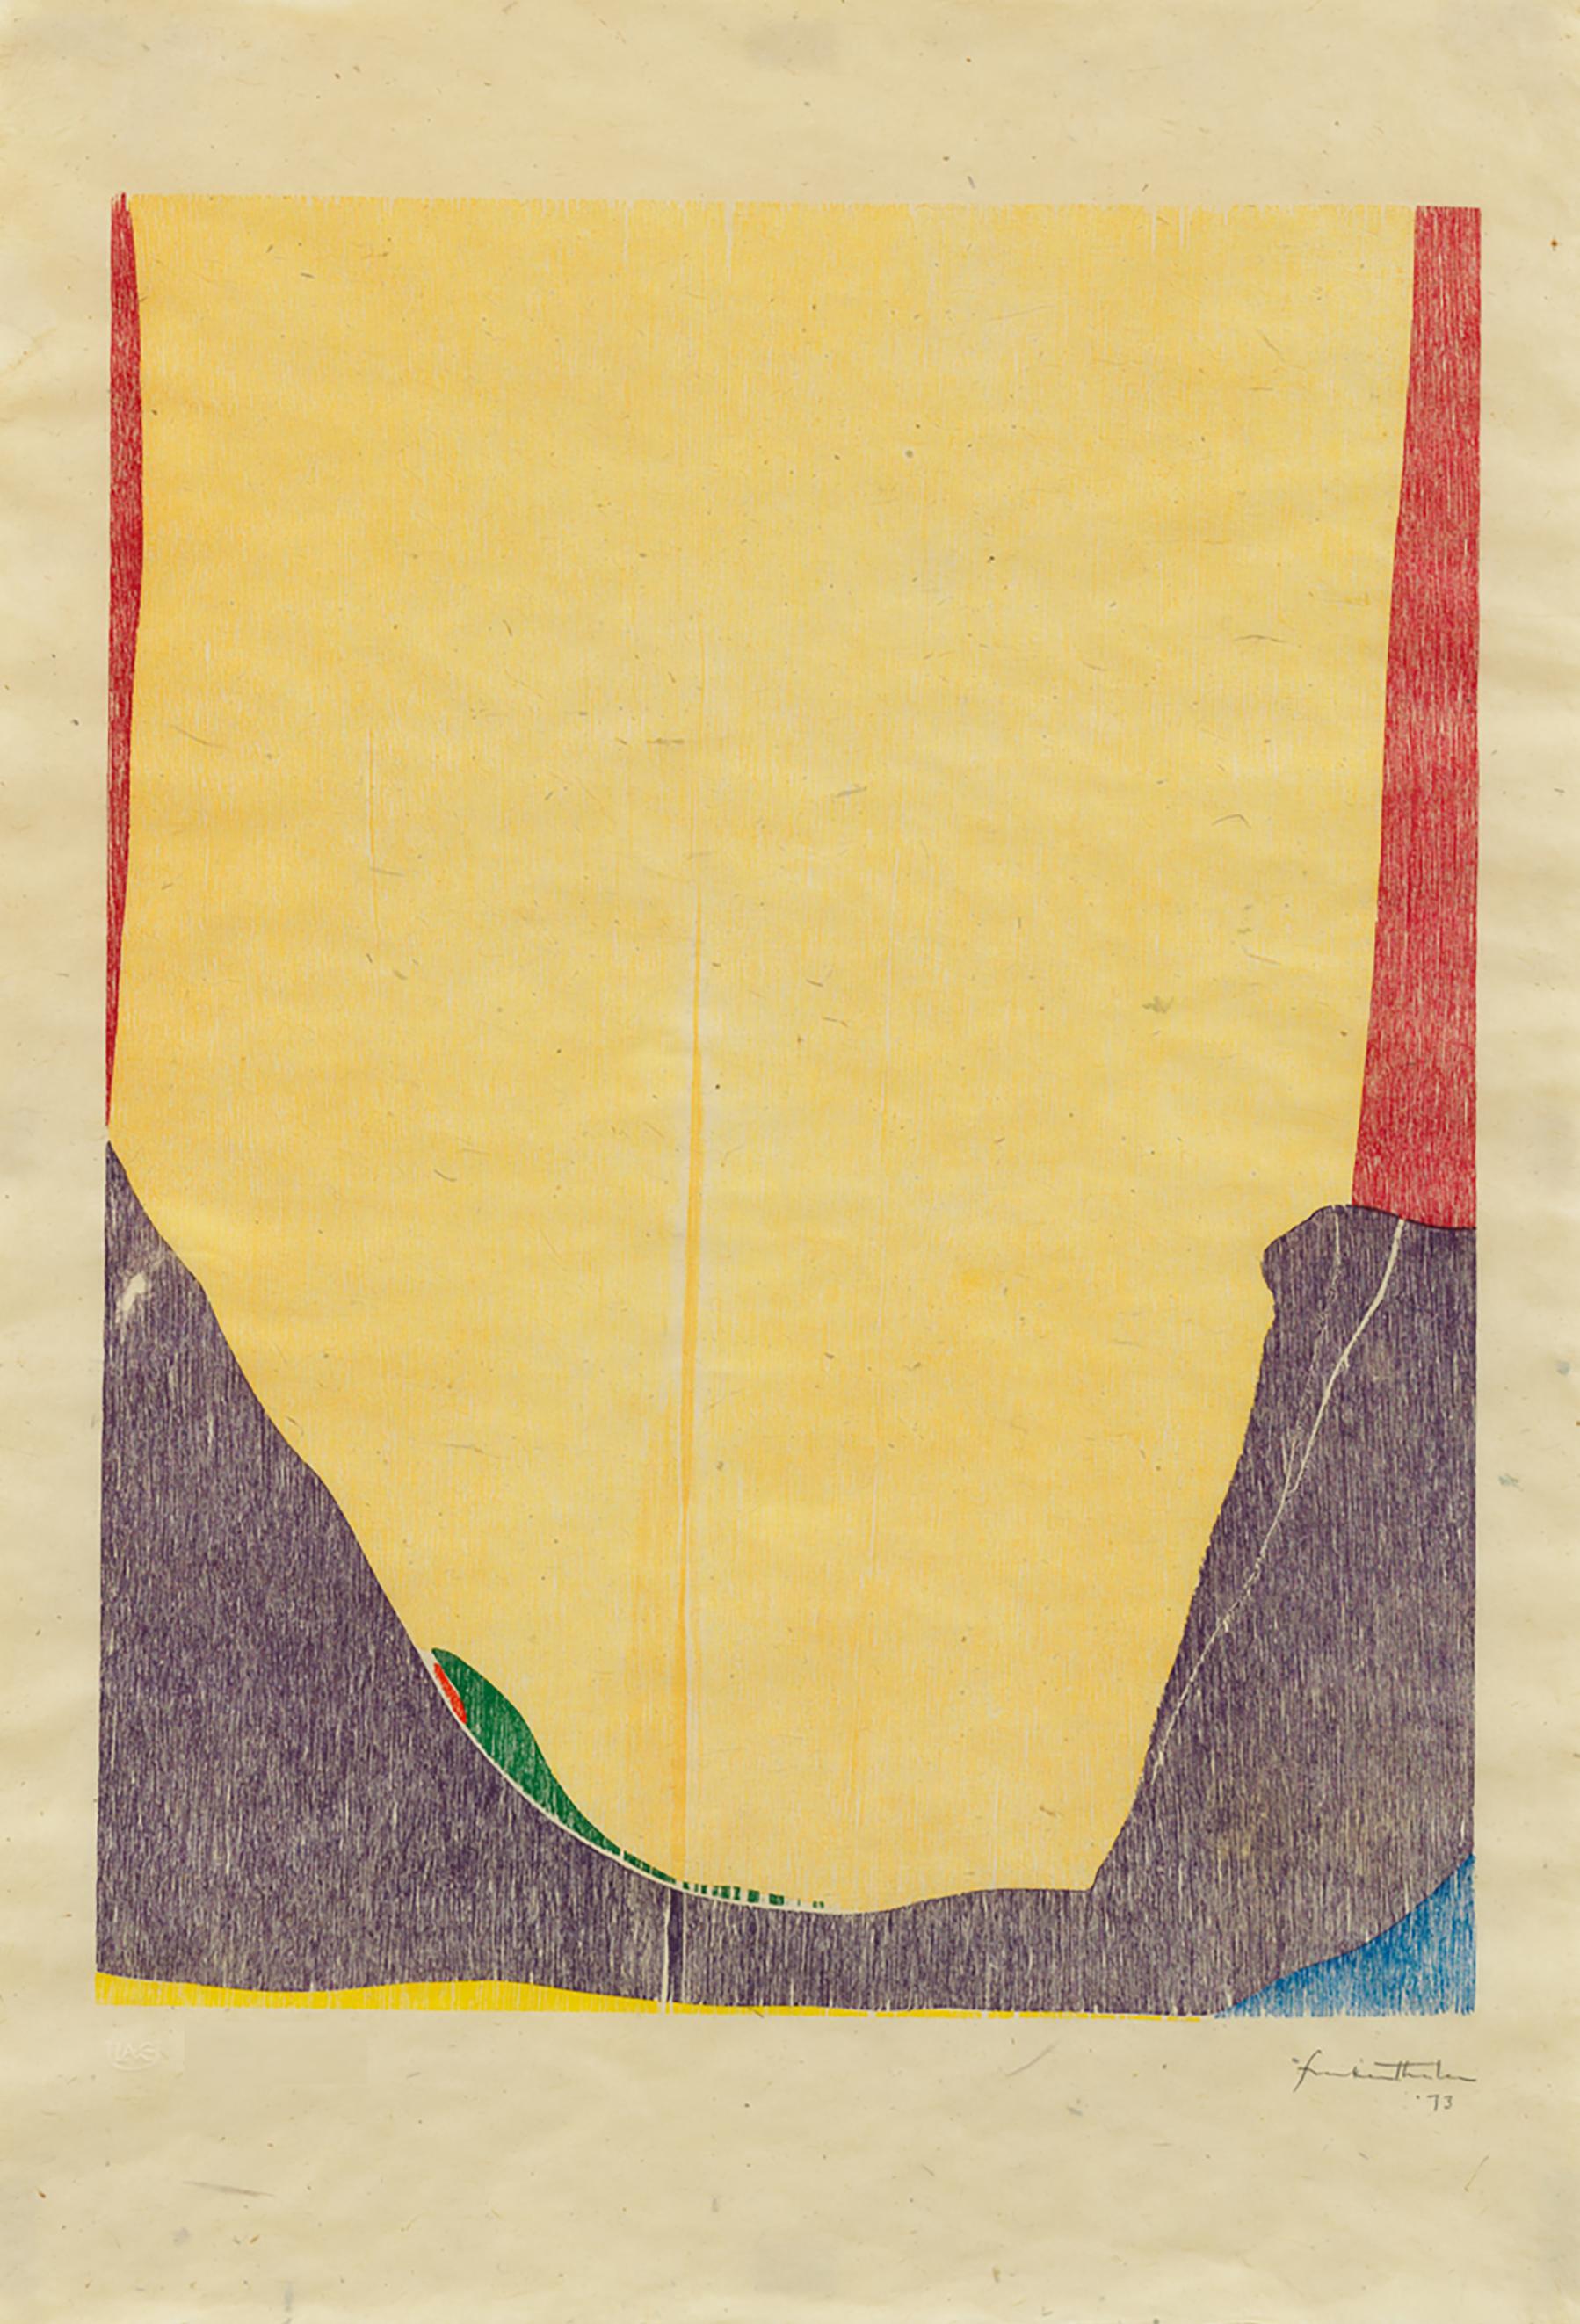 Abstract Print Helen Frankenthaler - L'Est et l'Ouest